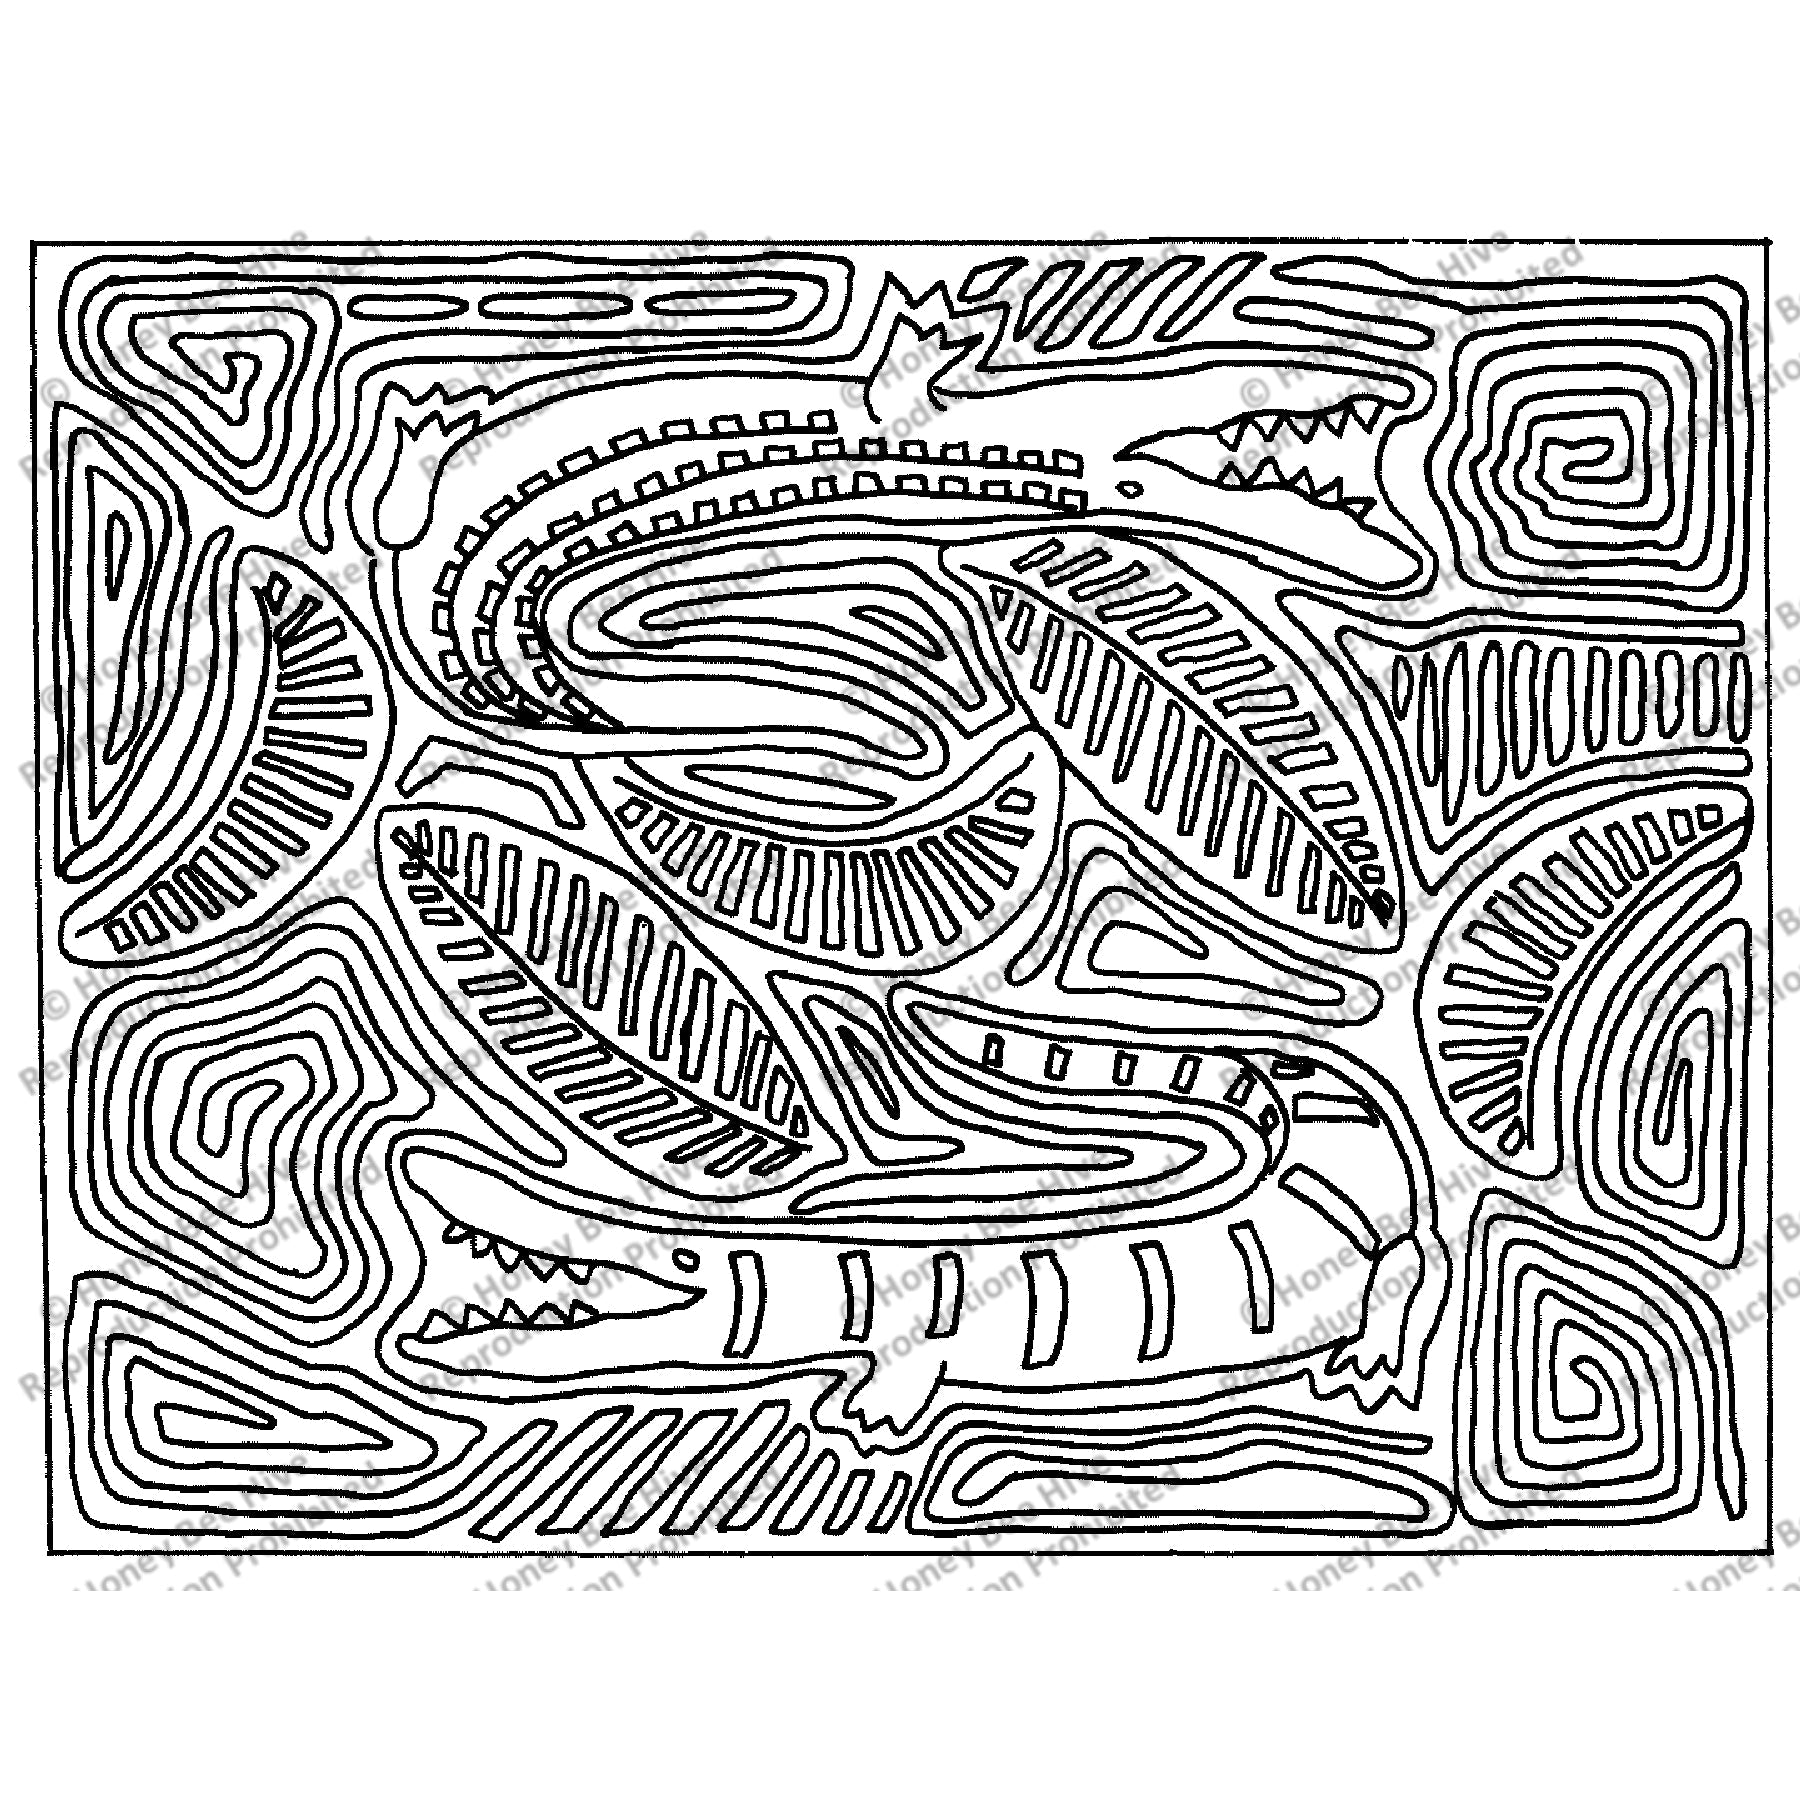 Crocodile Mola, rug hooking pattern